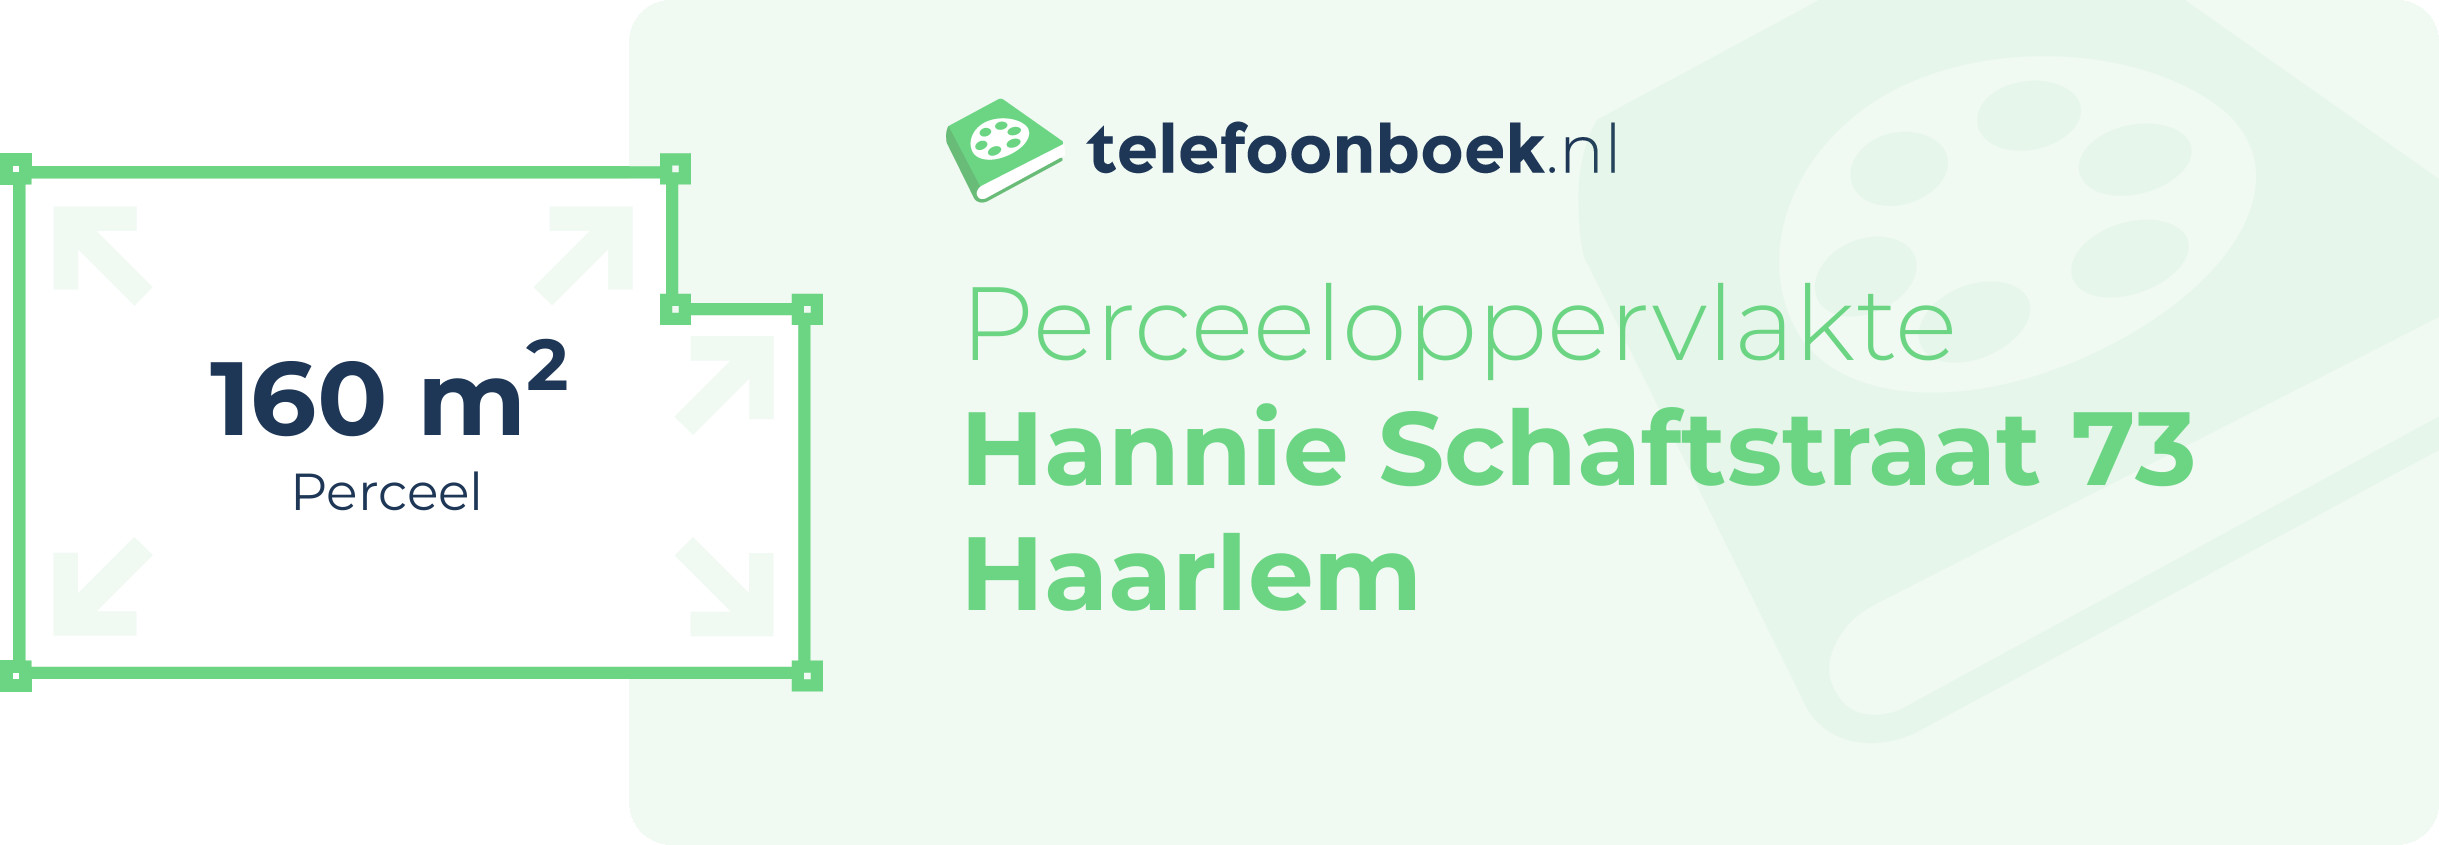 Perceeloppervlakte Hannie Schaftstraat 73 Haarlem